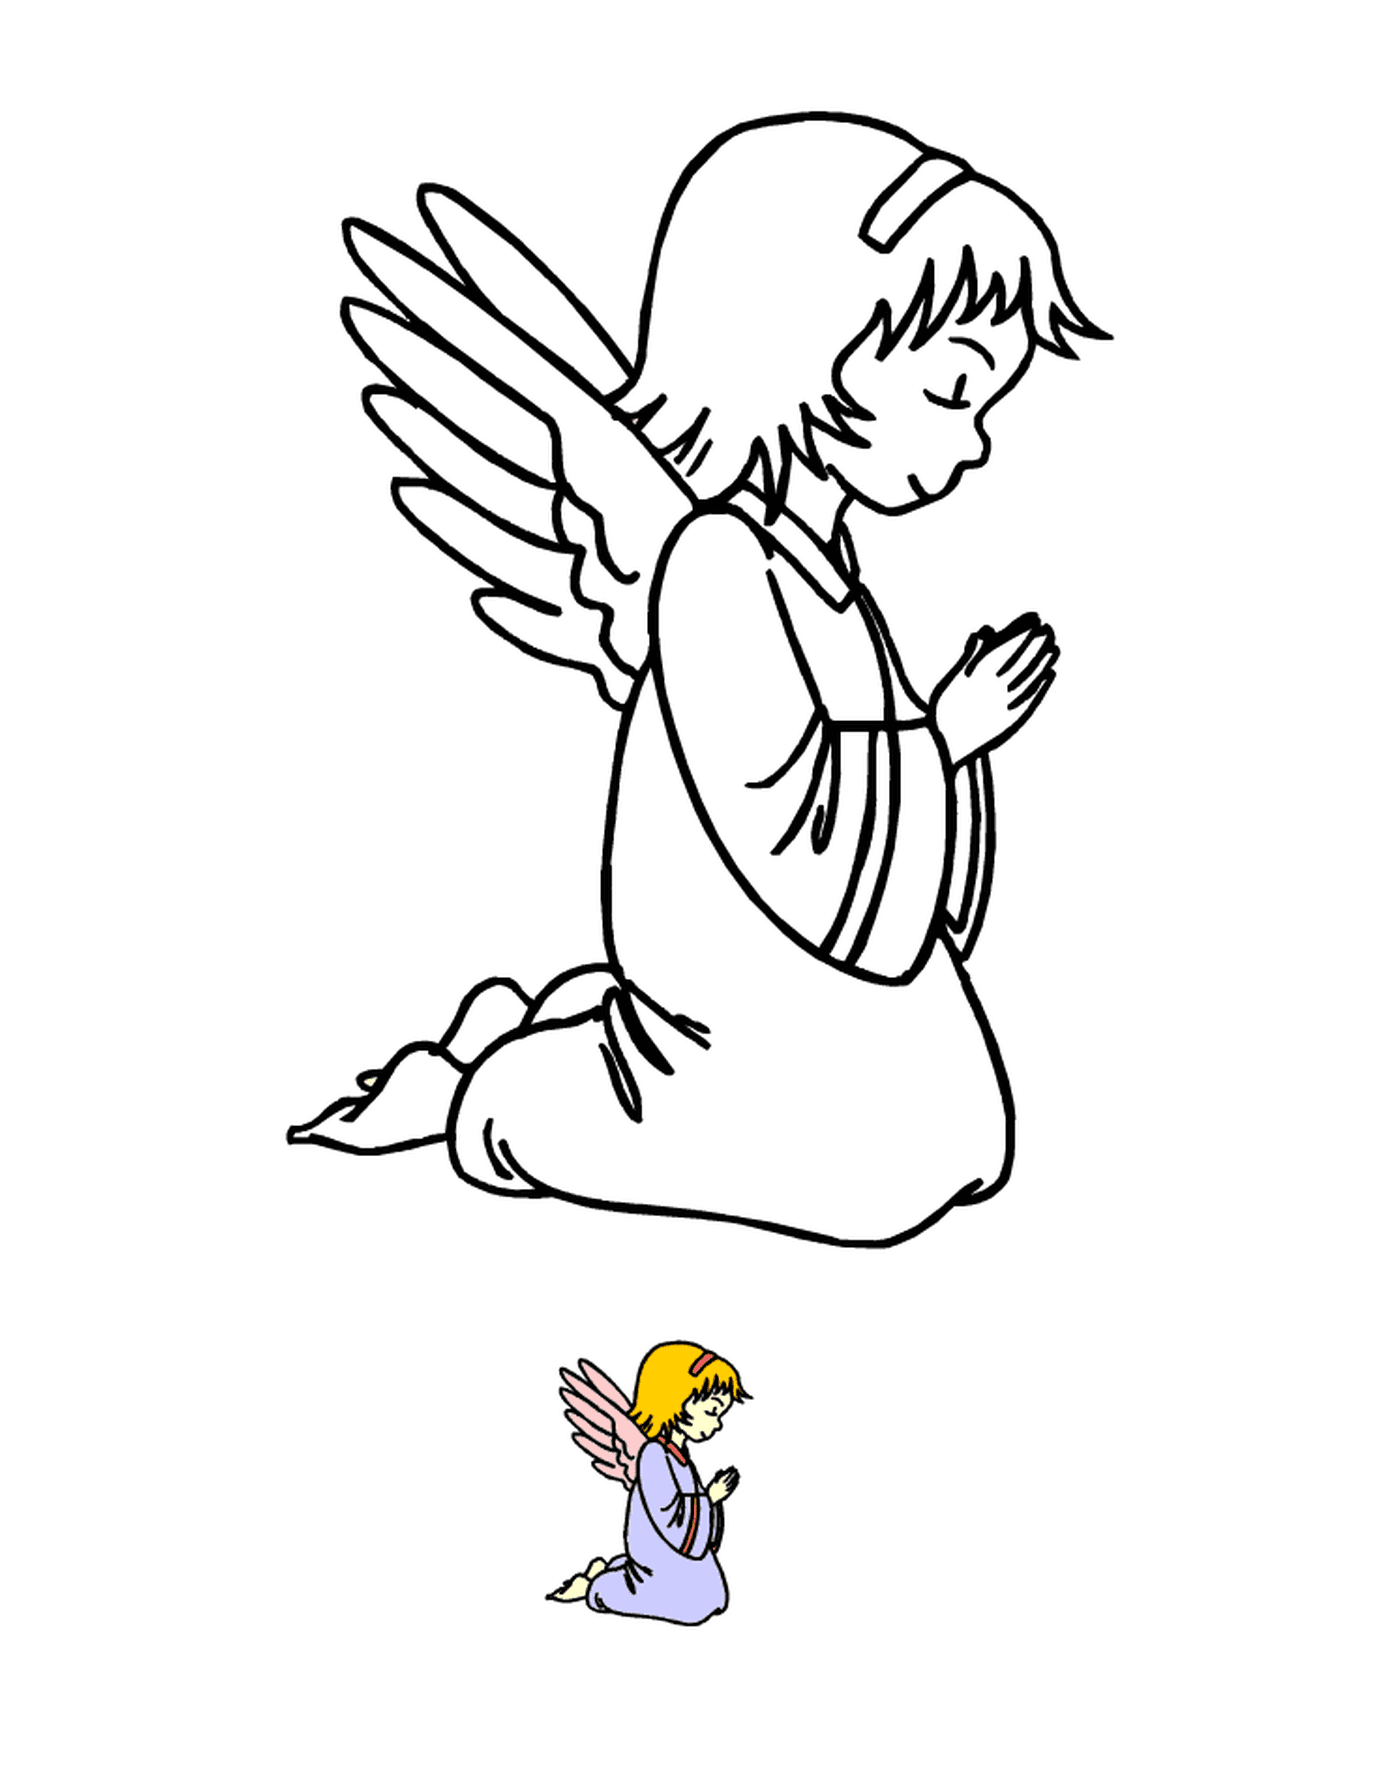  An angel kneeling in prayer with a bird nearby 